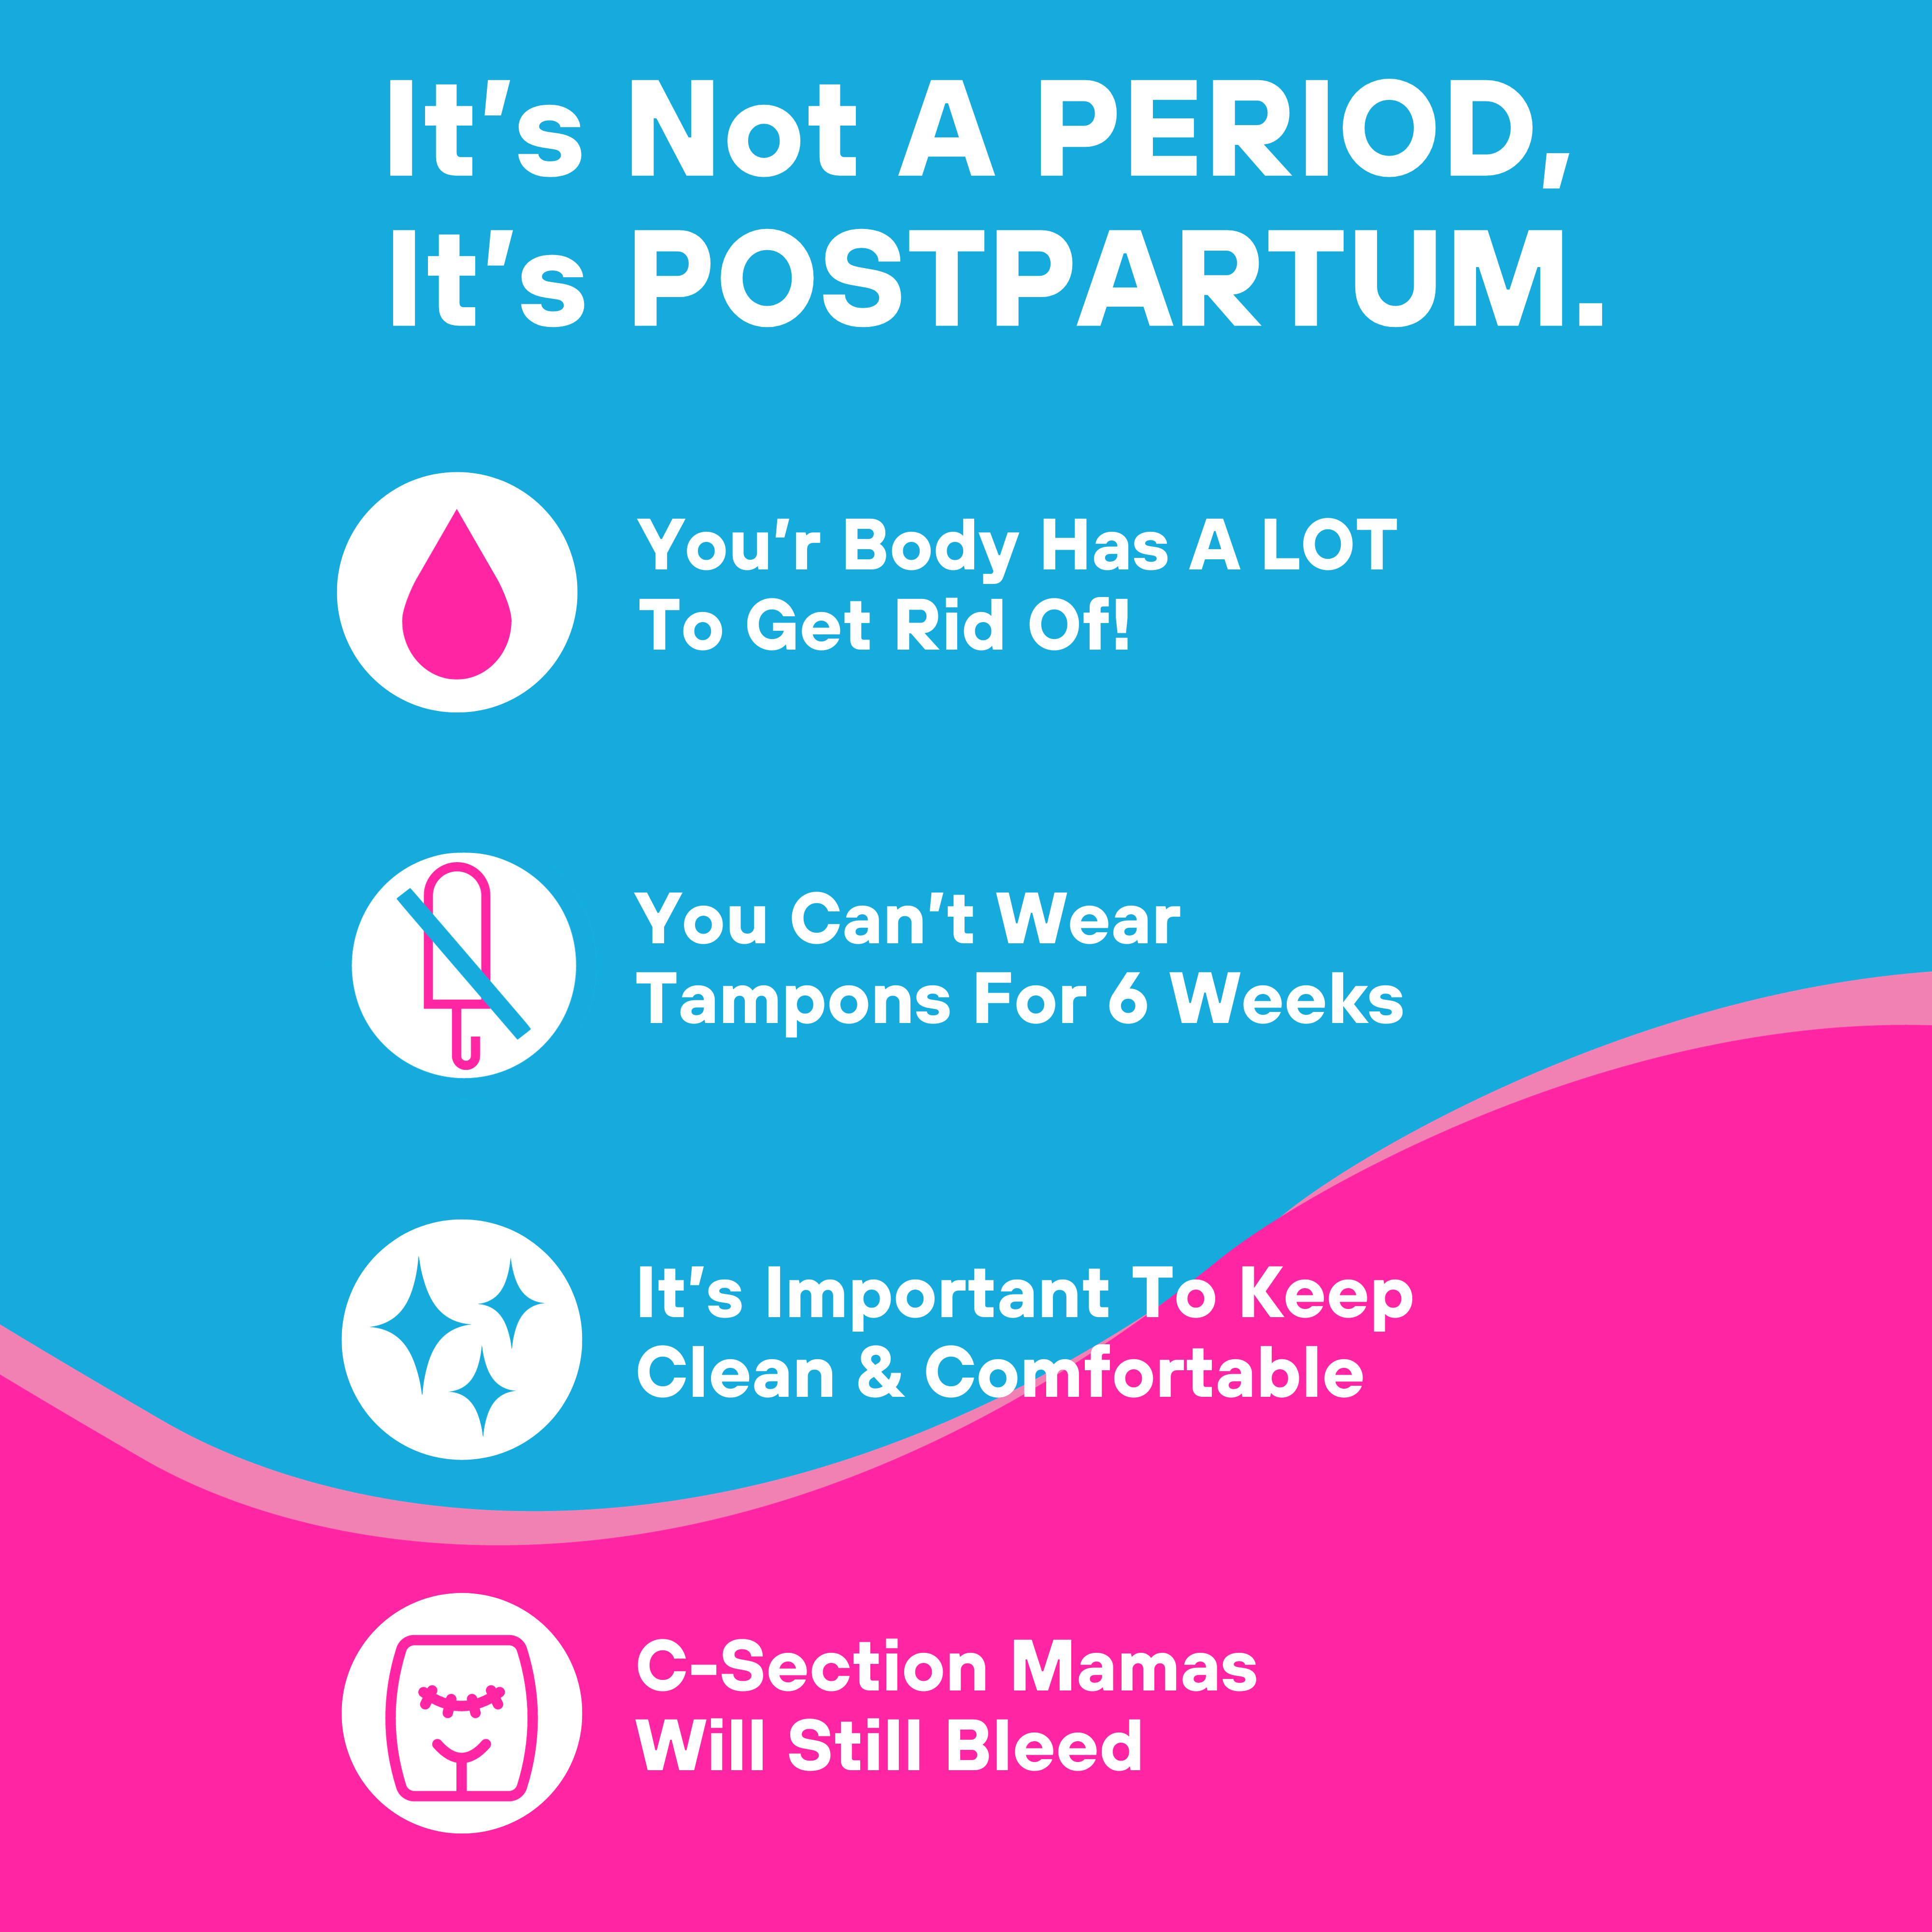 Organic Postpartum Pads  PELV-ICE LLC. Postpartum Pads